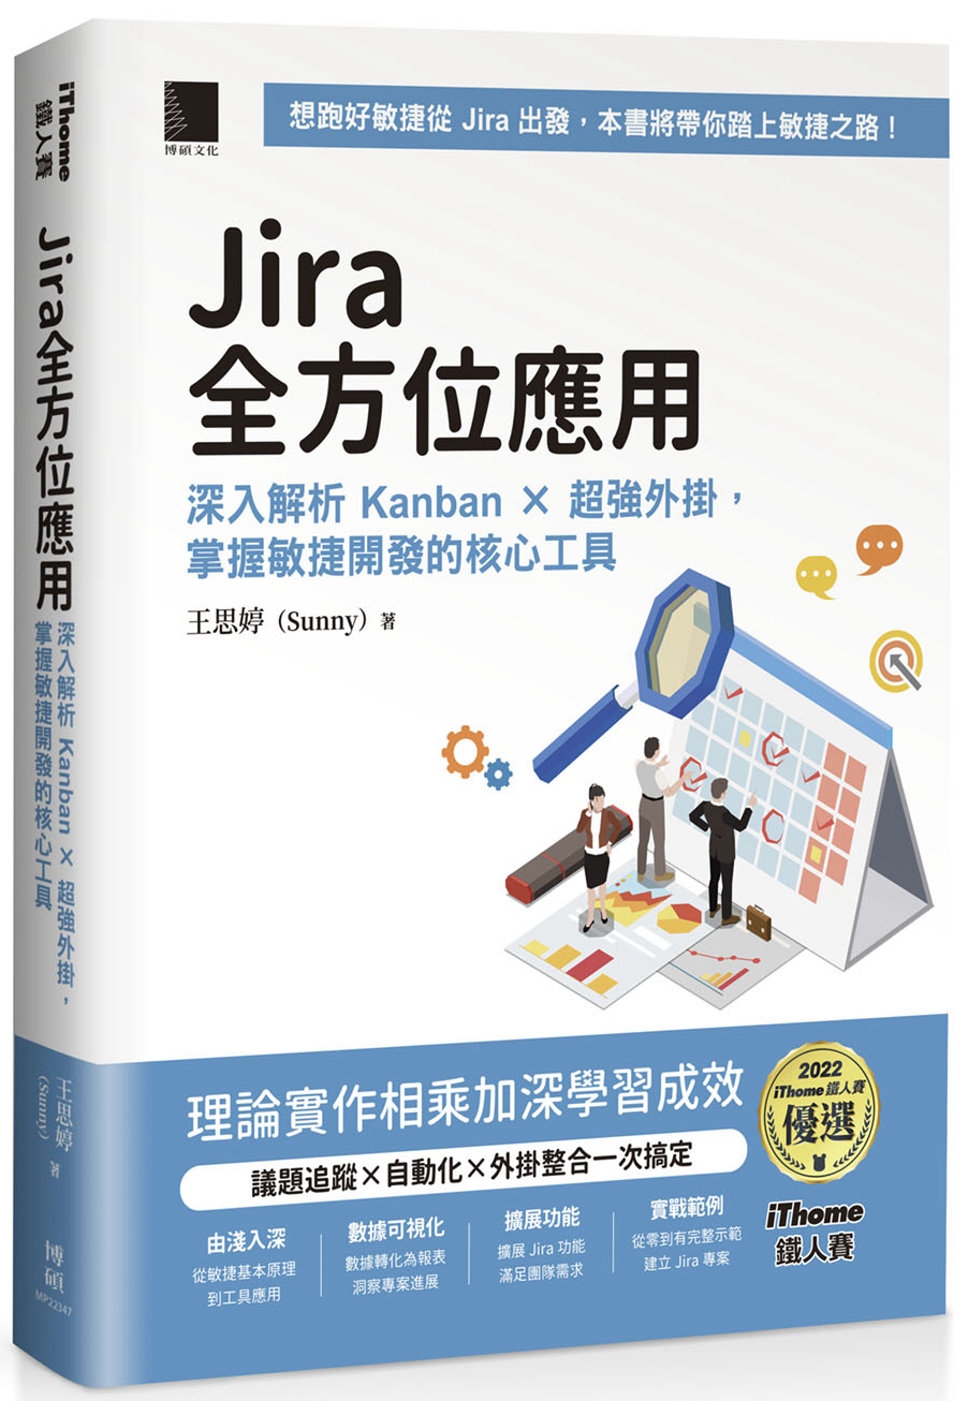 Jira 全方位應用：深入解析 Kanban × 超強外掛，掌握敏捷開發的核心工具 (iThome鐵人賽系列書)【軟精裝】